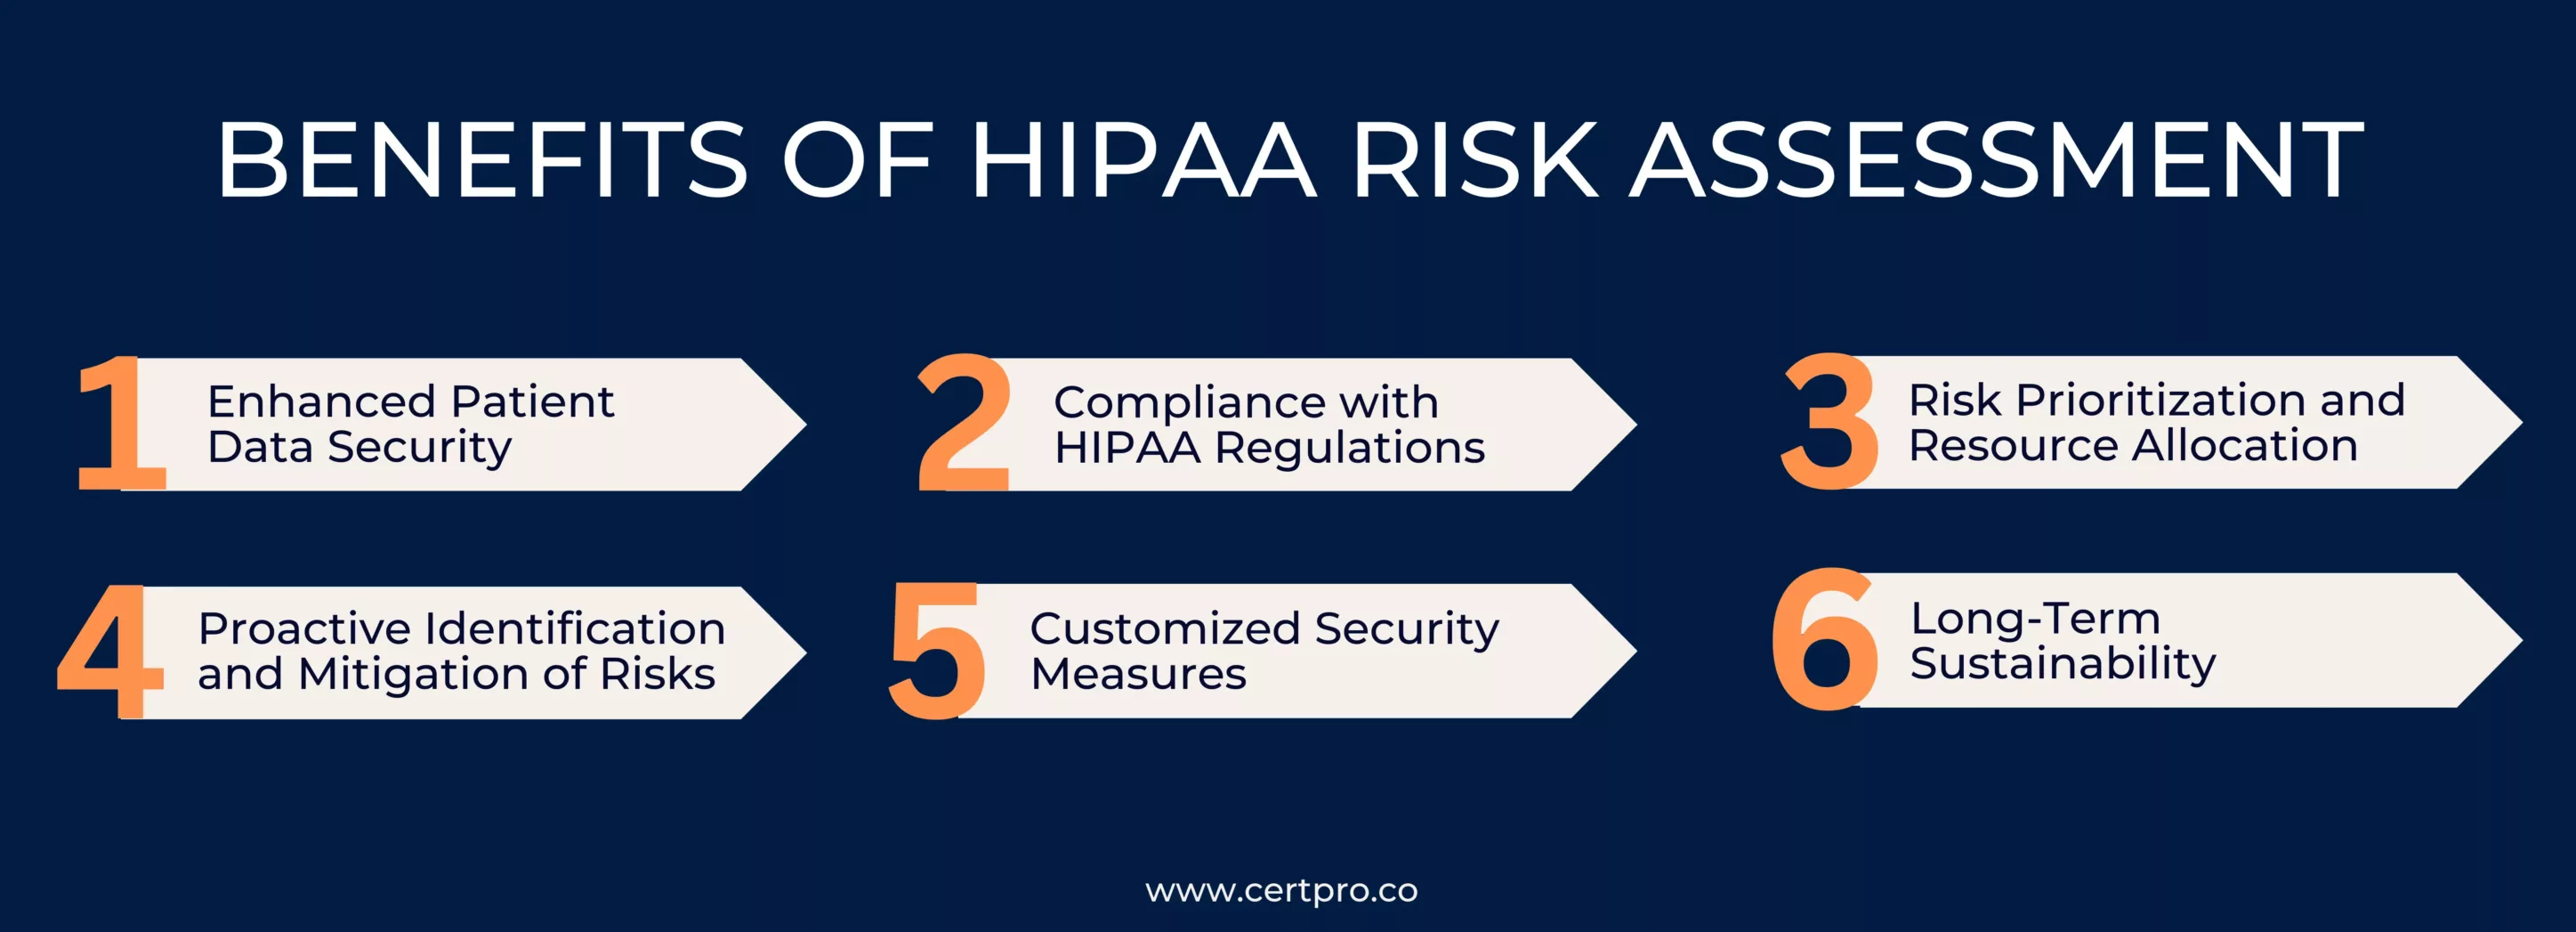 Benefits of HIPAA risk